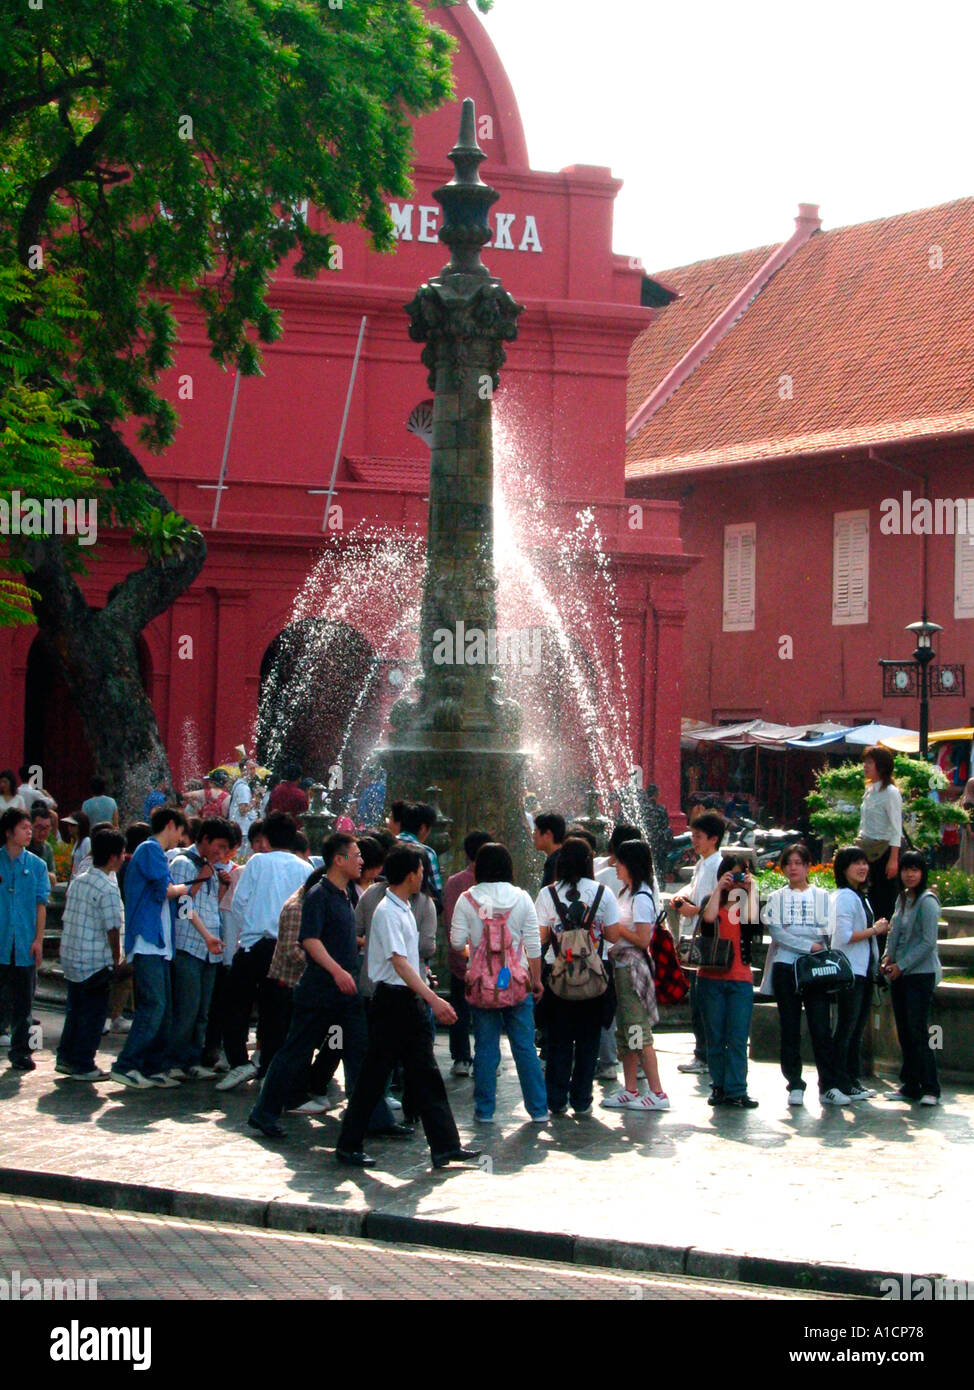 Junge Touristen in das Queen Victoria Memorial fountain Dutch Square Melaka, Malaysia Stockfoto